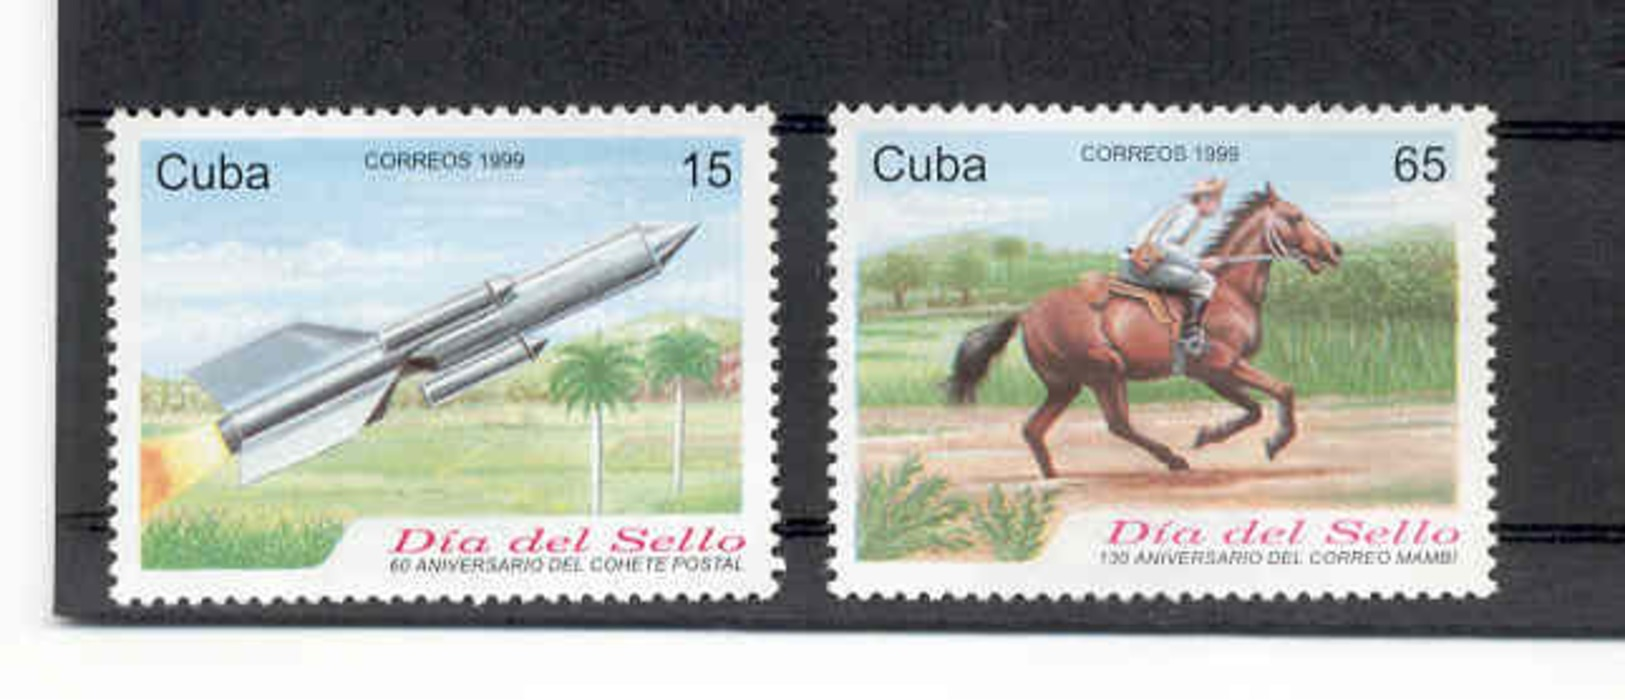 Cuba 1999 Stamp Day. Postal Rocket And Mambi Mail. Horse. MNH. Scott 4003-4004. Value $3.10 - Caballos